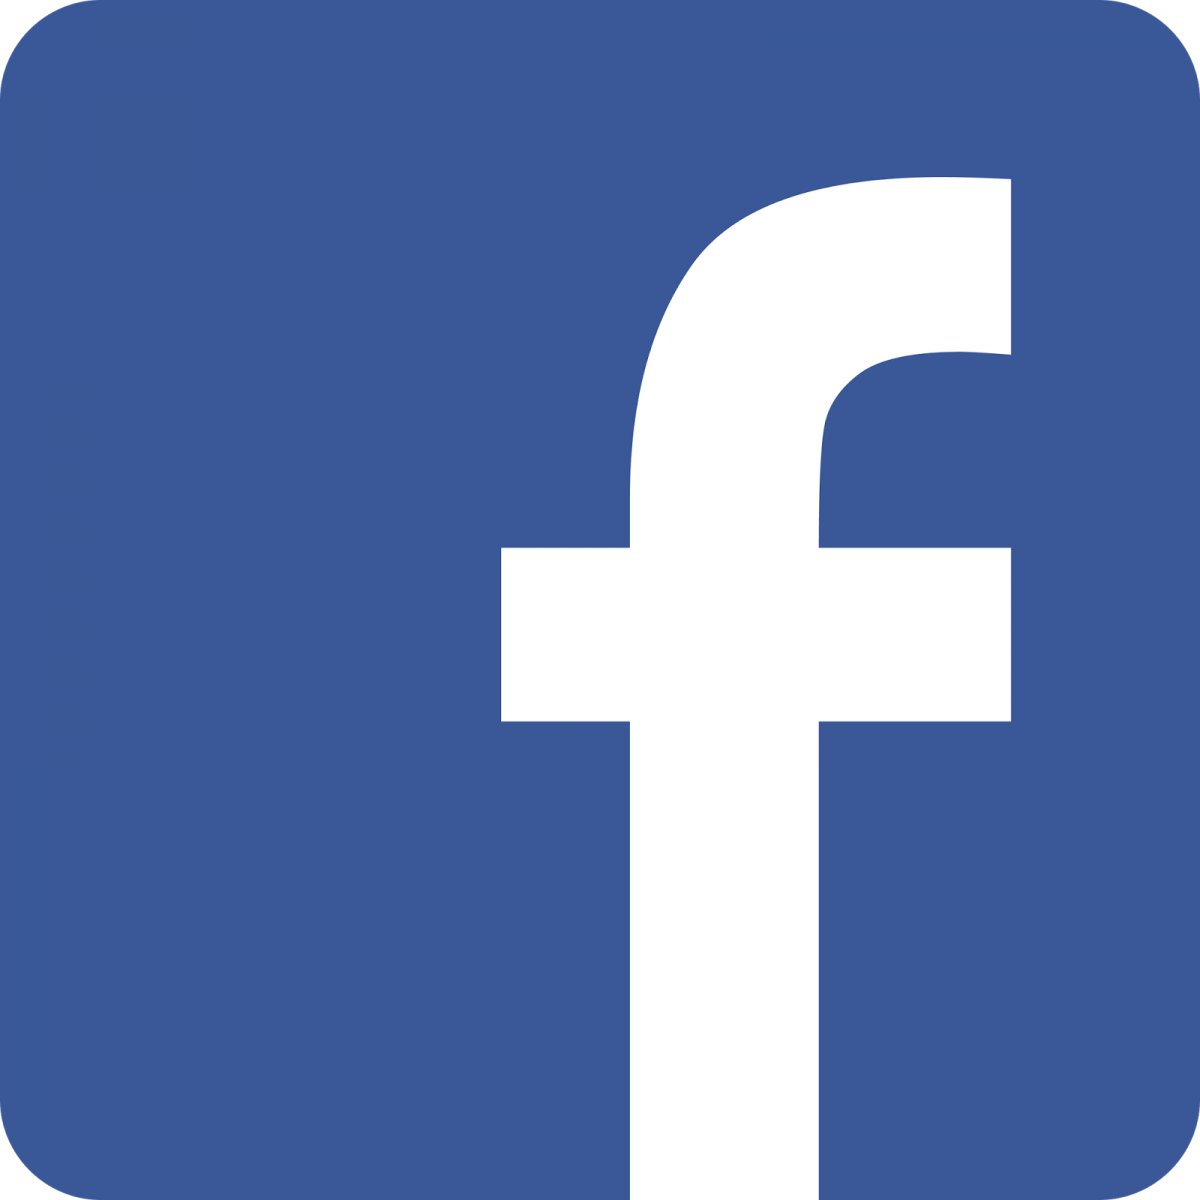 facebook-logo-png-transparent-background-1200x1200 - My 247 Gym